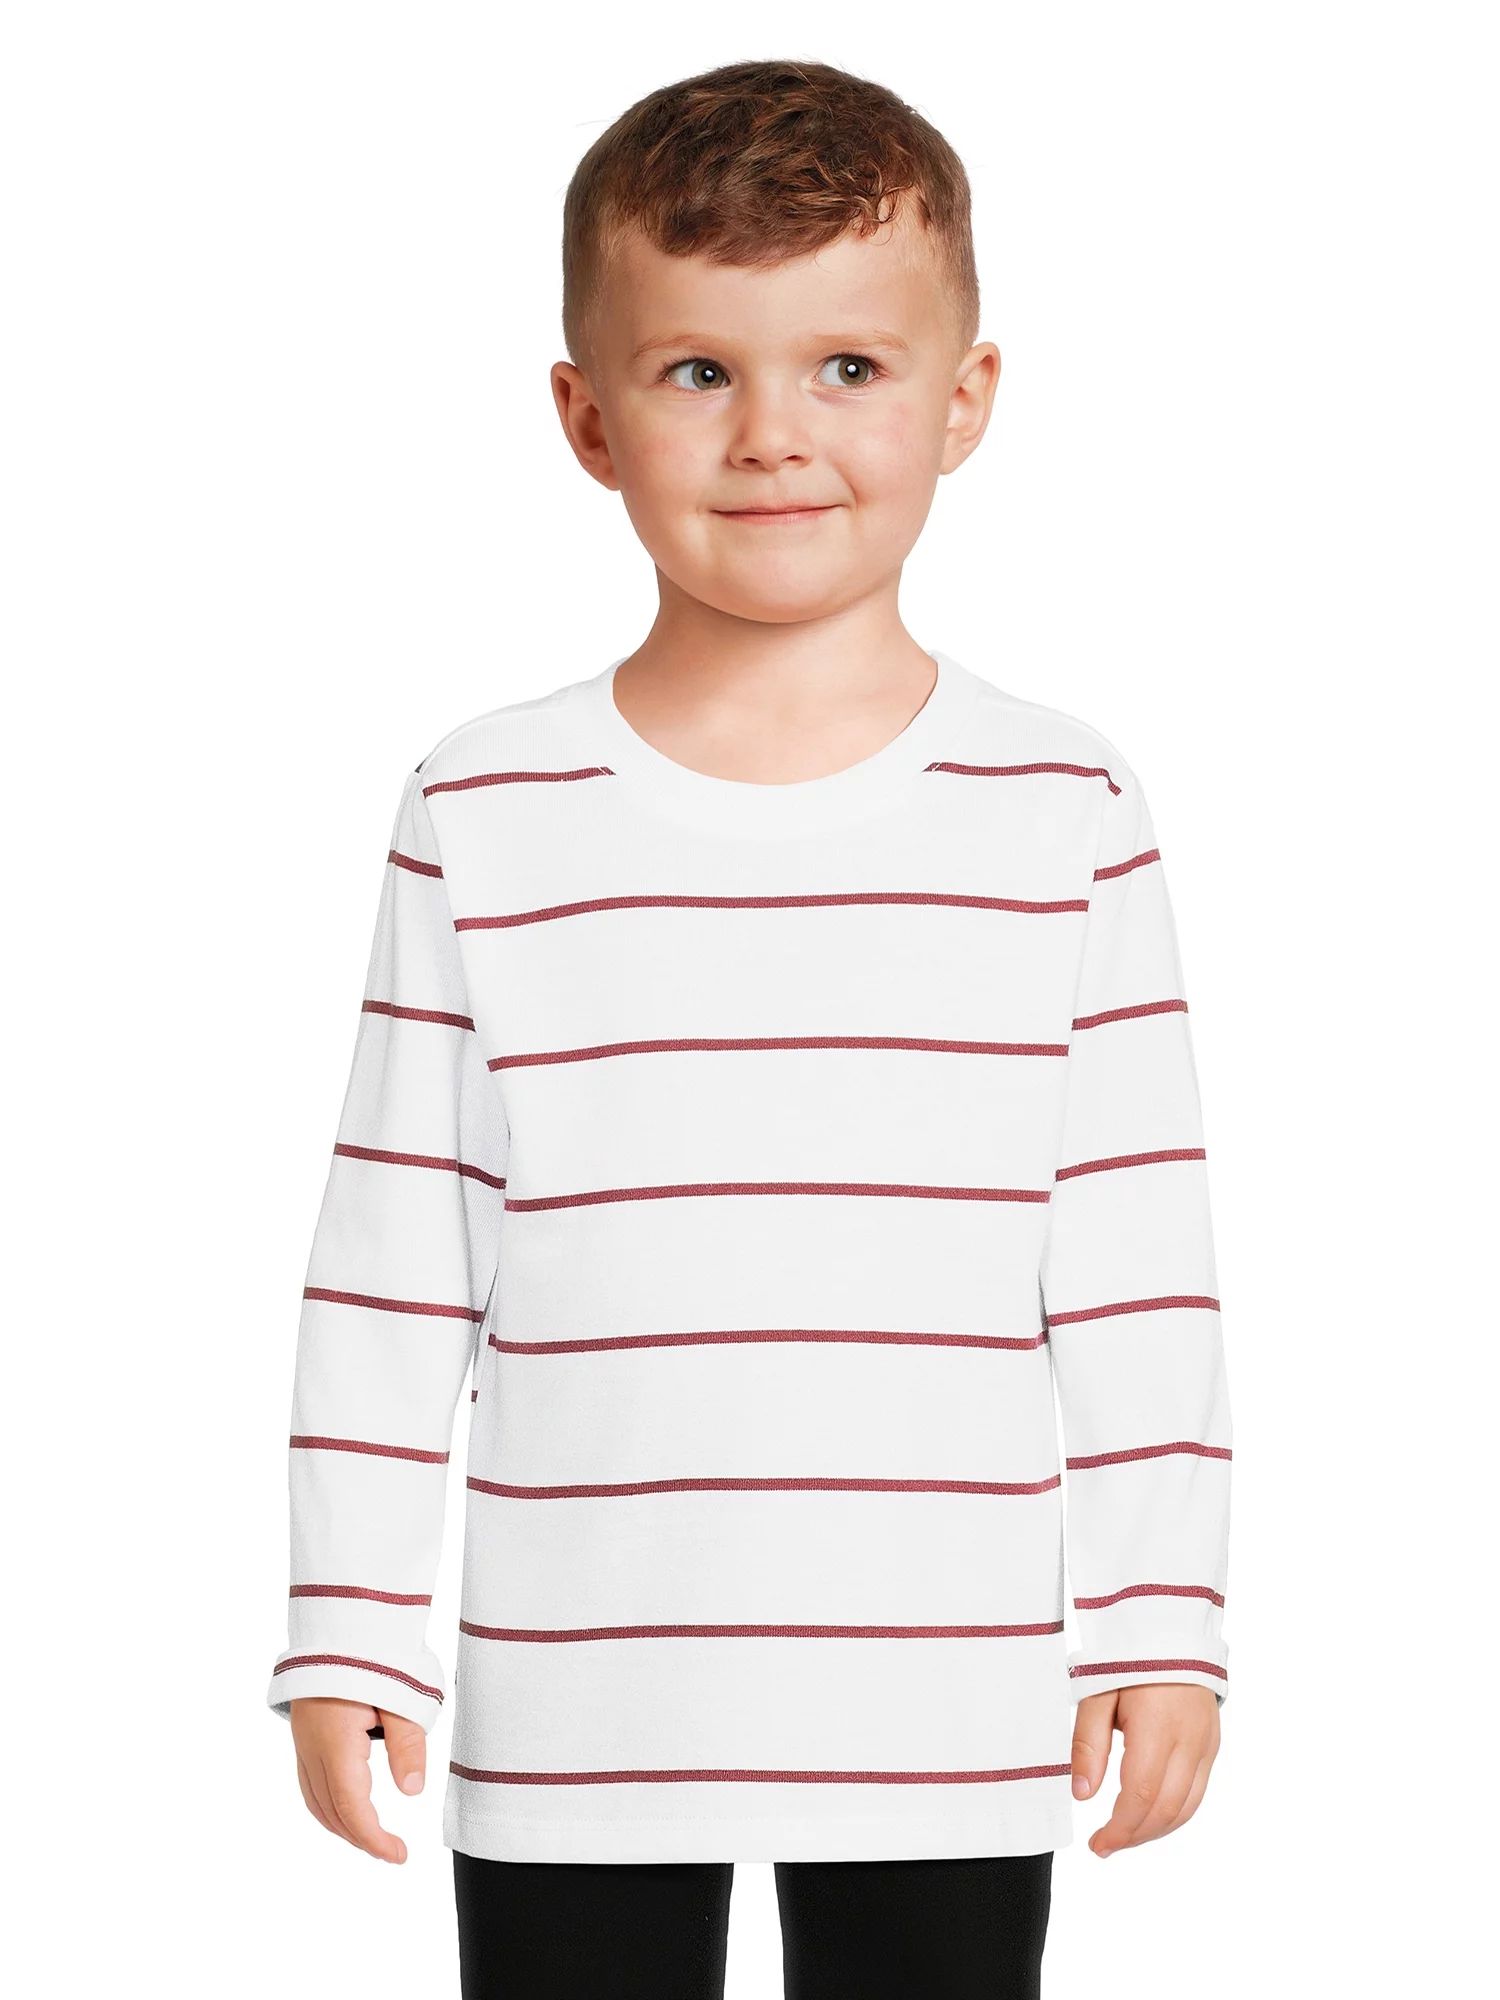 Garanimals Toddler Boy Long Sleeve Striped T-Shirt, Sizes 12M-5T | Walmart (US)